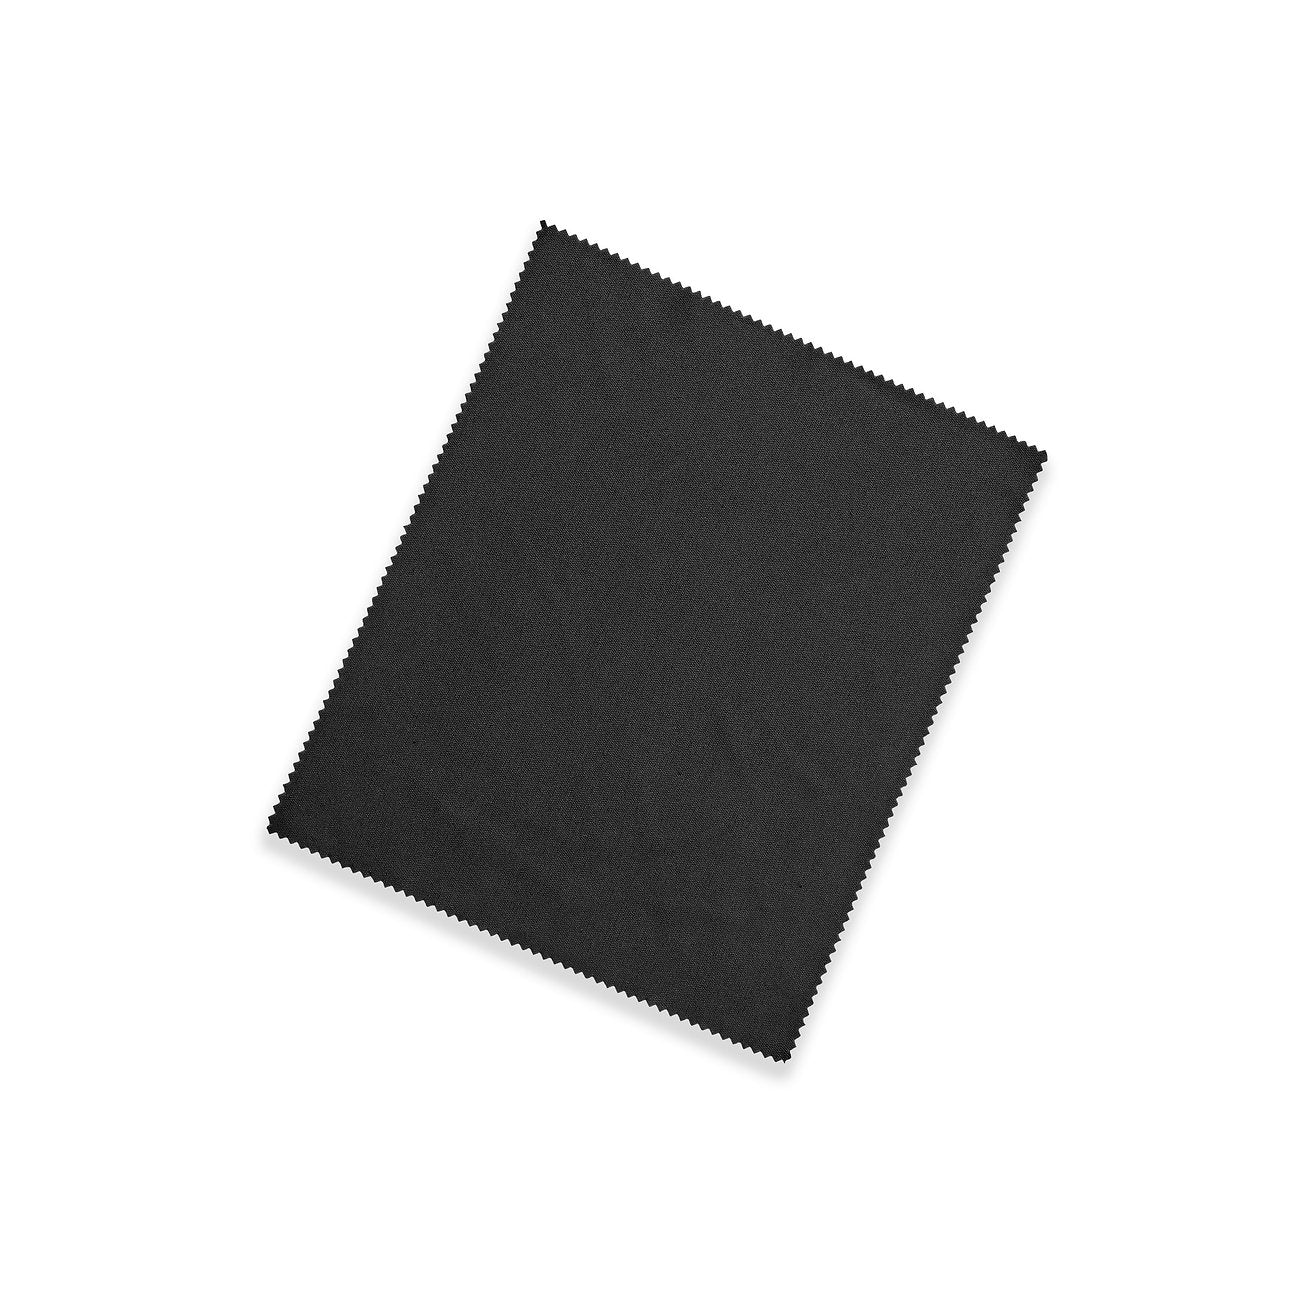 Black microfiber cloth